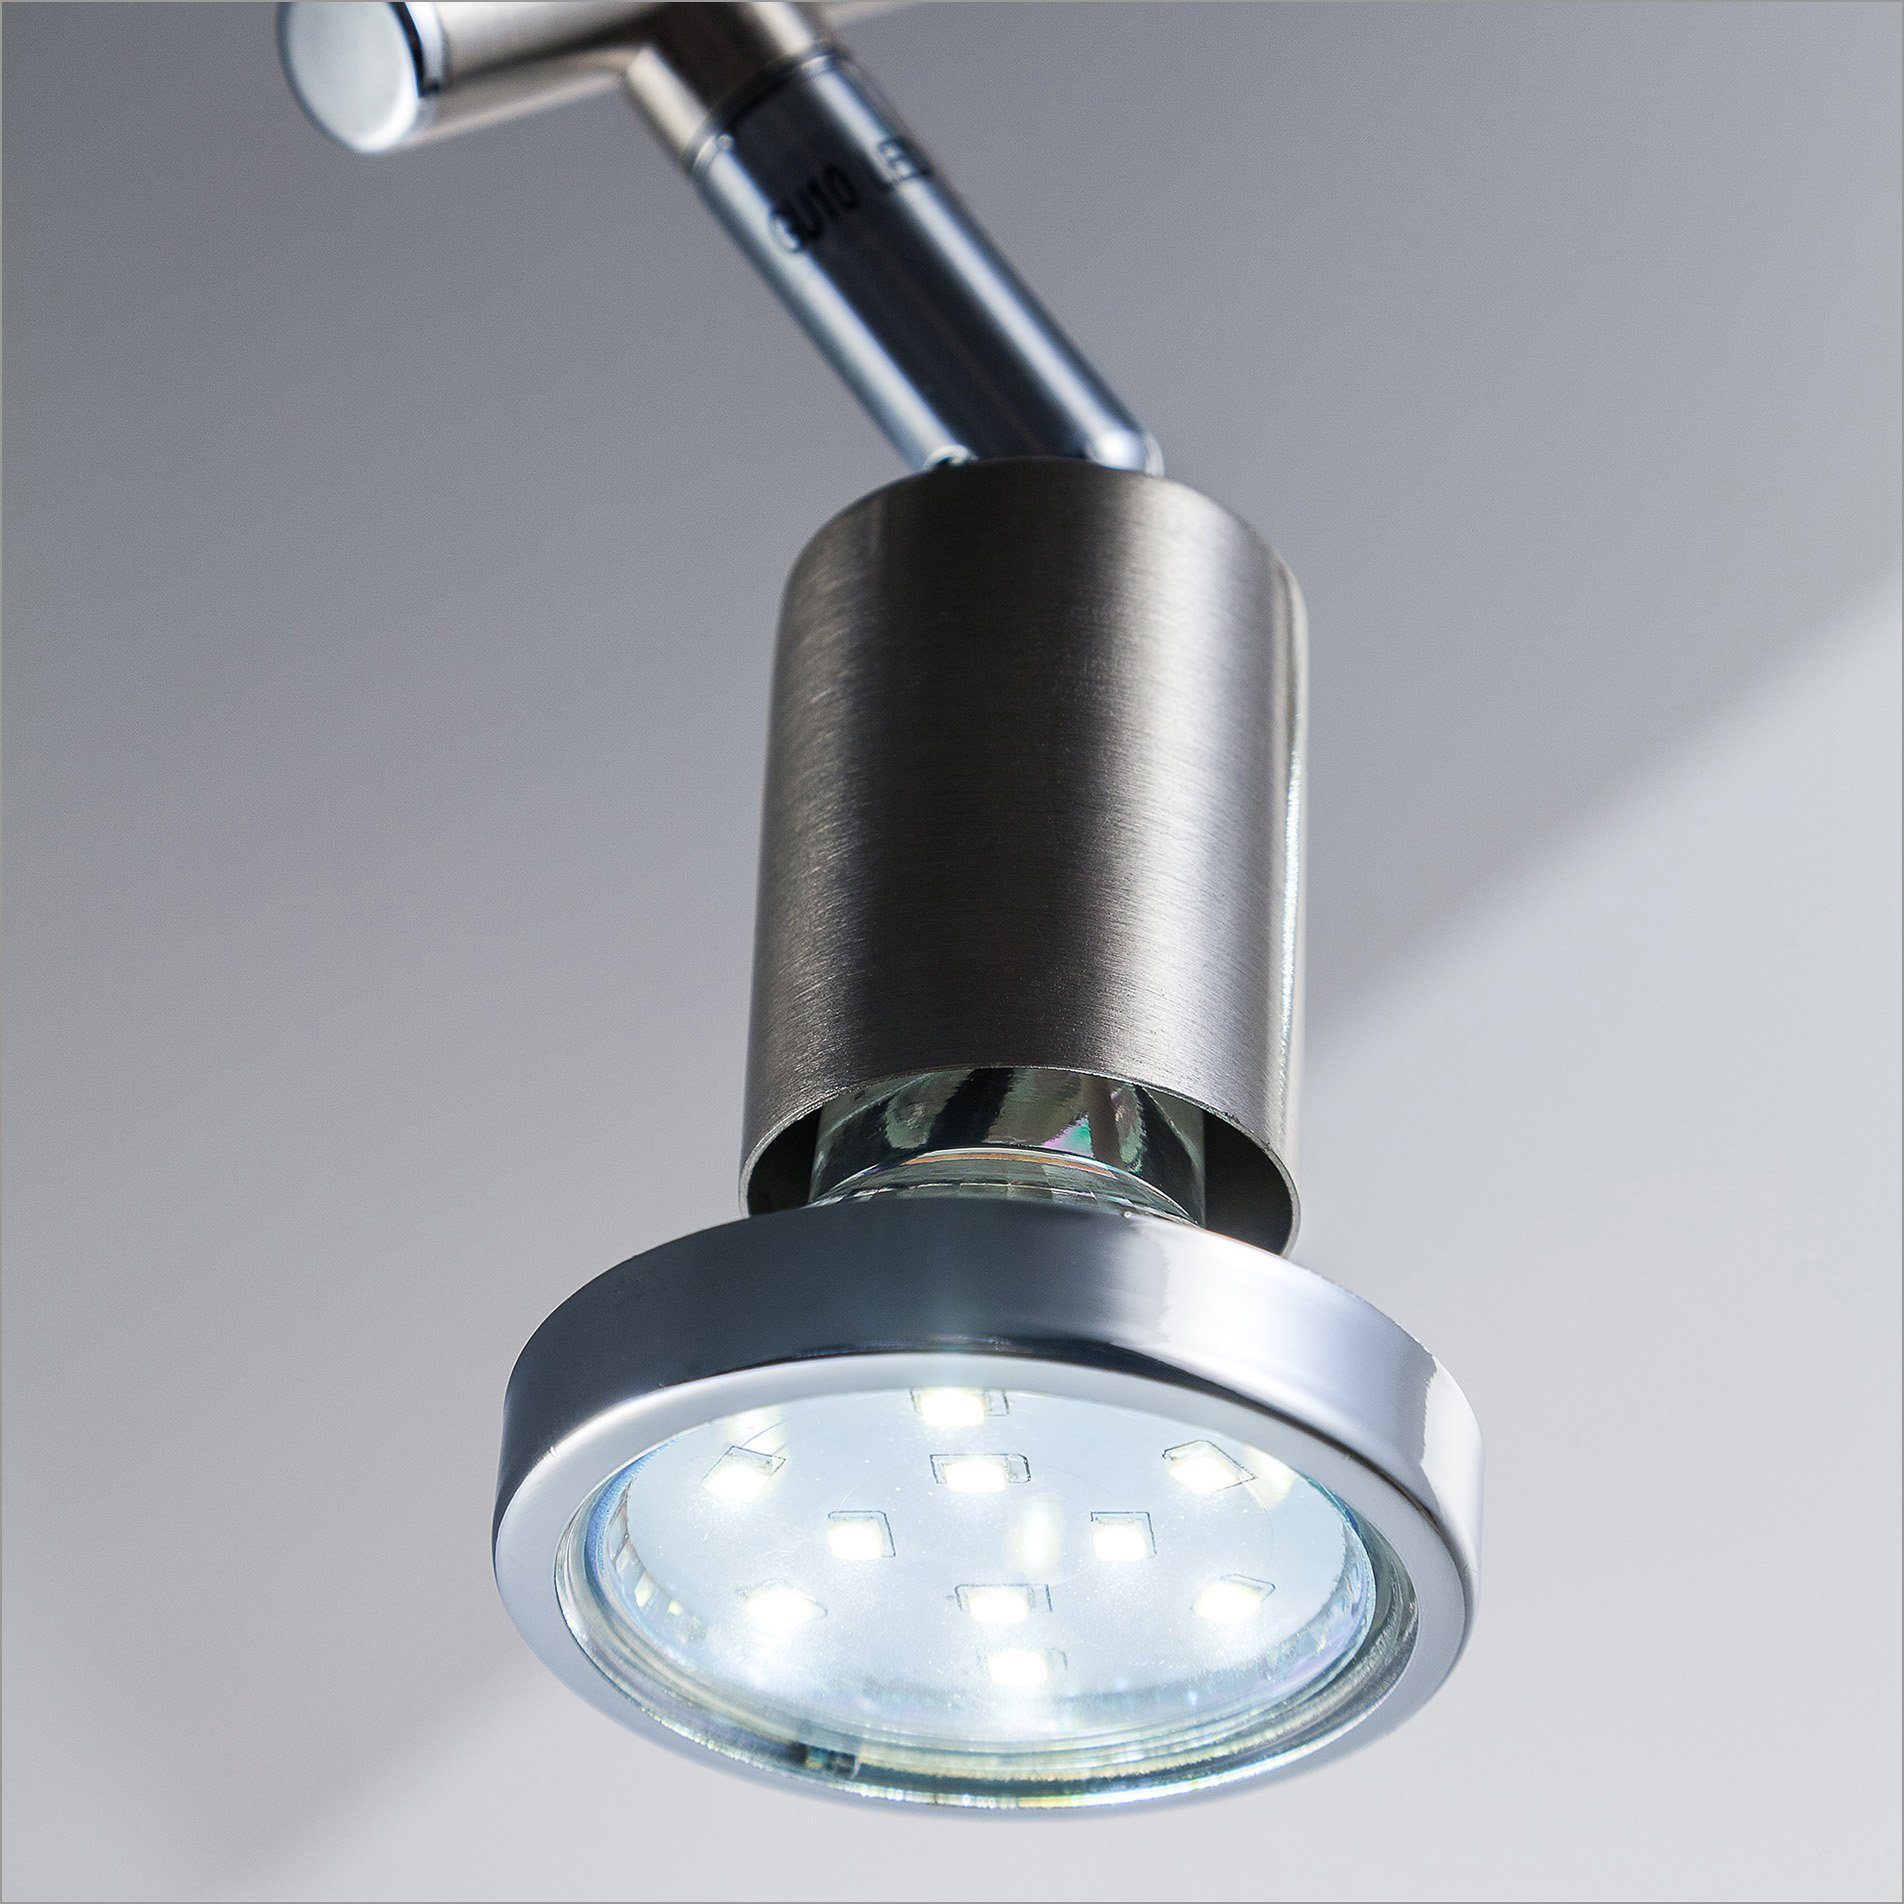 B.K.Licht LED Deckenspots Warmweiß, Deckenstrahler, LED wechselbar, 3W Lumen, schwenkbar, 250 inkl. warmweiß GU10 LED Mika